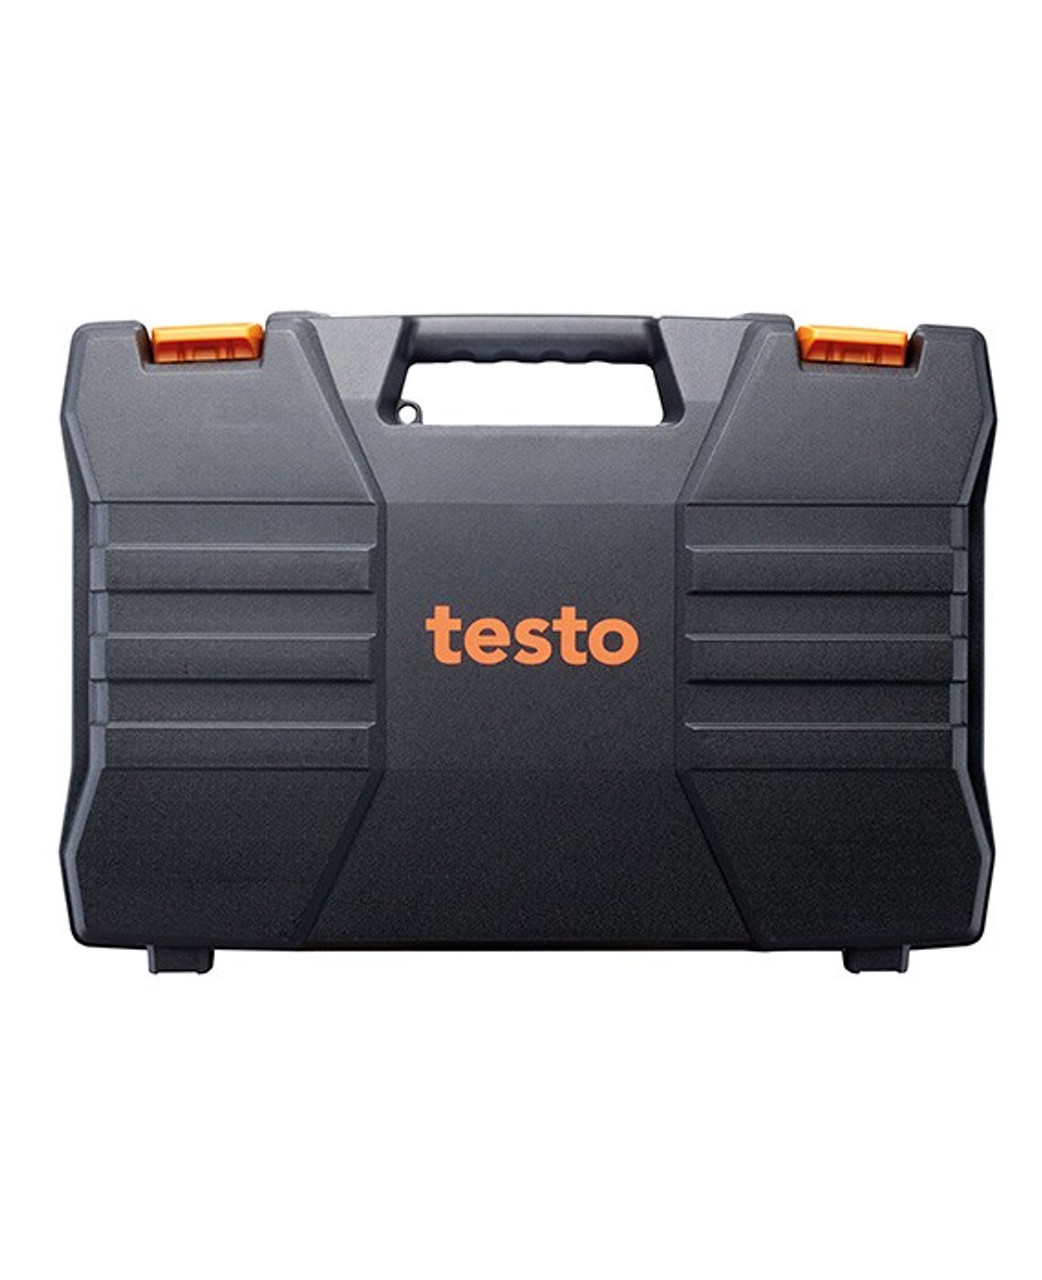 Testo 557 4 Way Valve Digital Manifold Kit With Built In Bluetooth 0563 1557